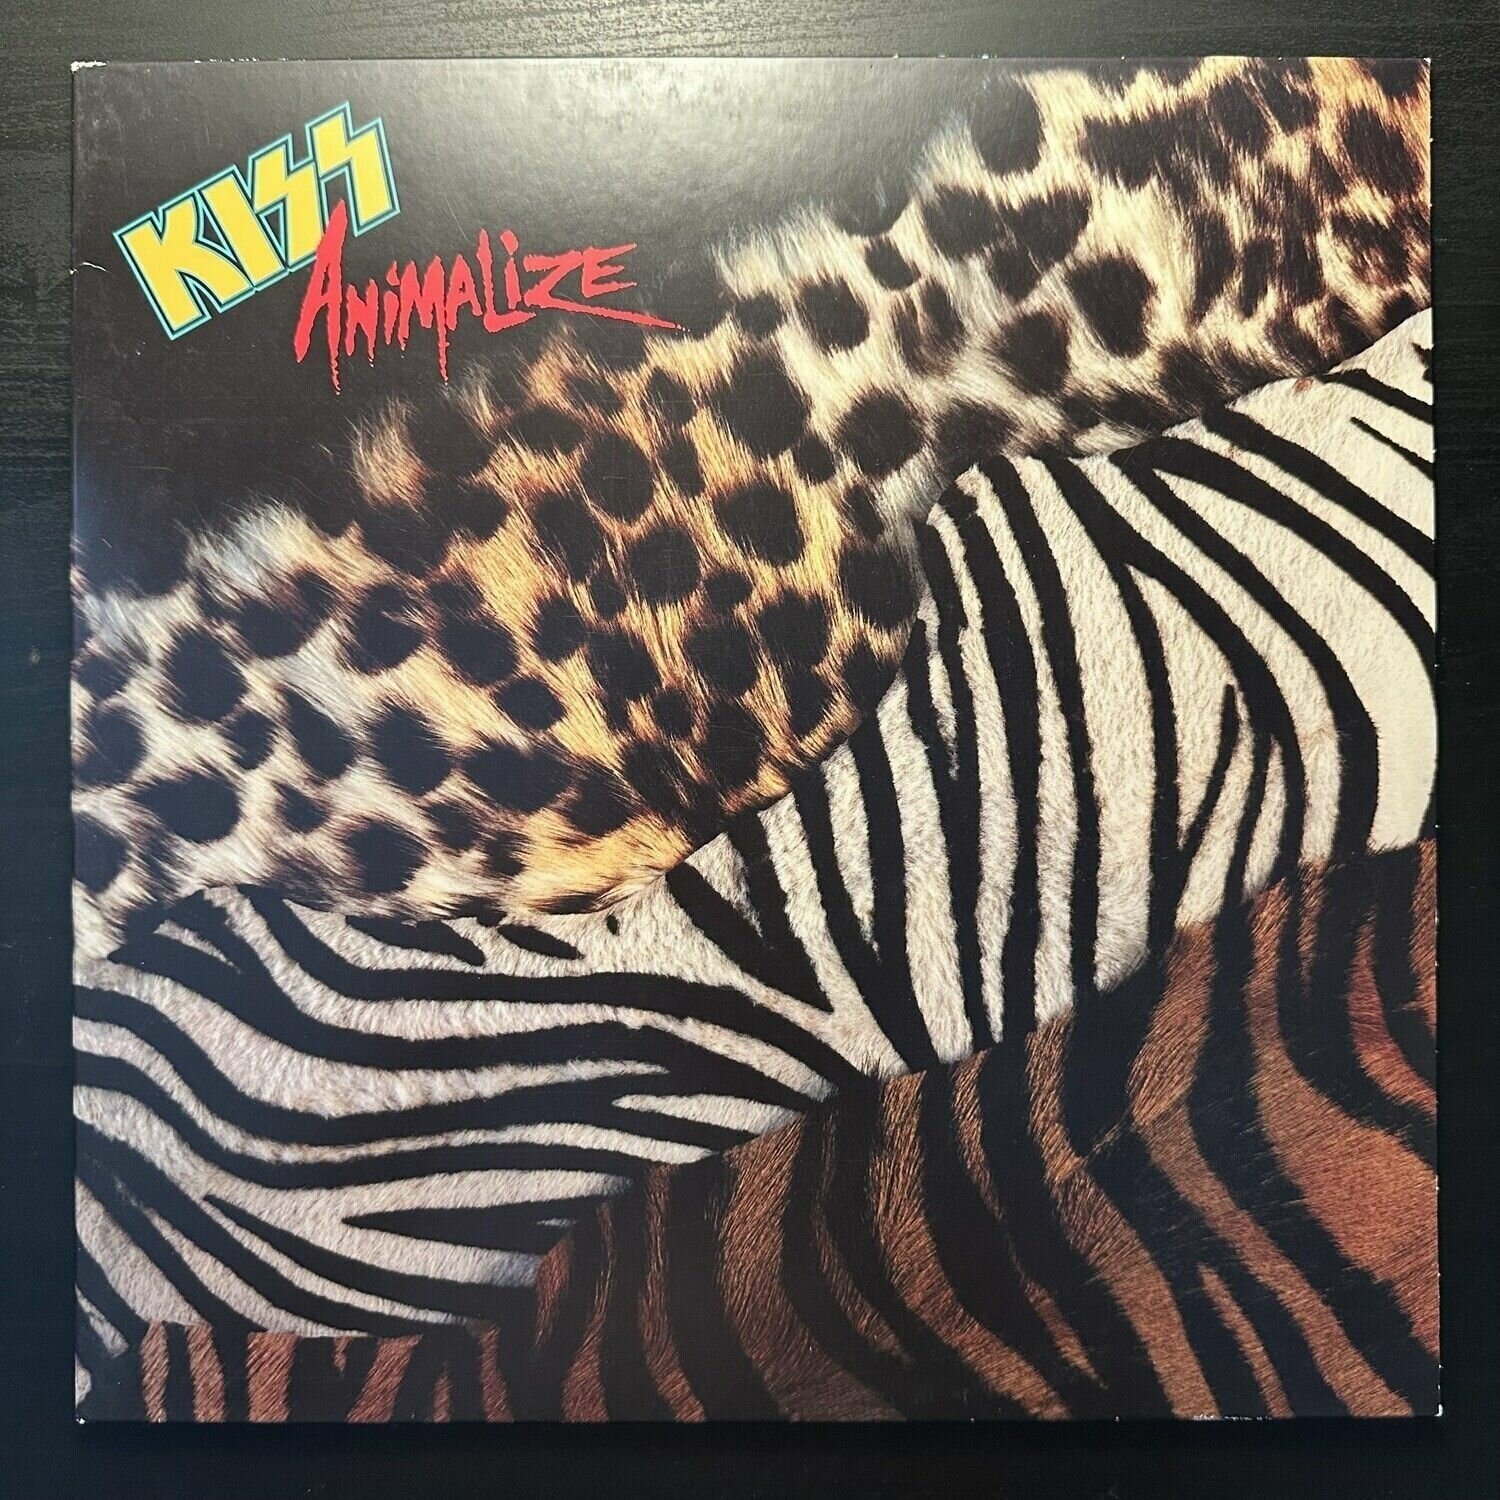 Виниловая пластинка Kiss Animalize (Европа 2014г.)